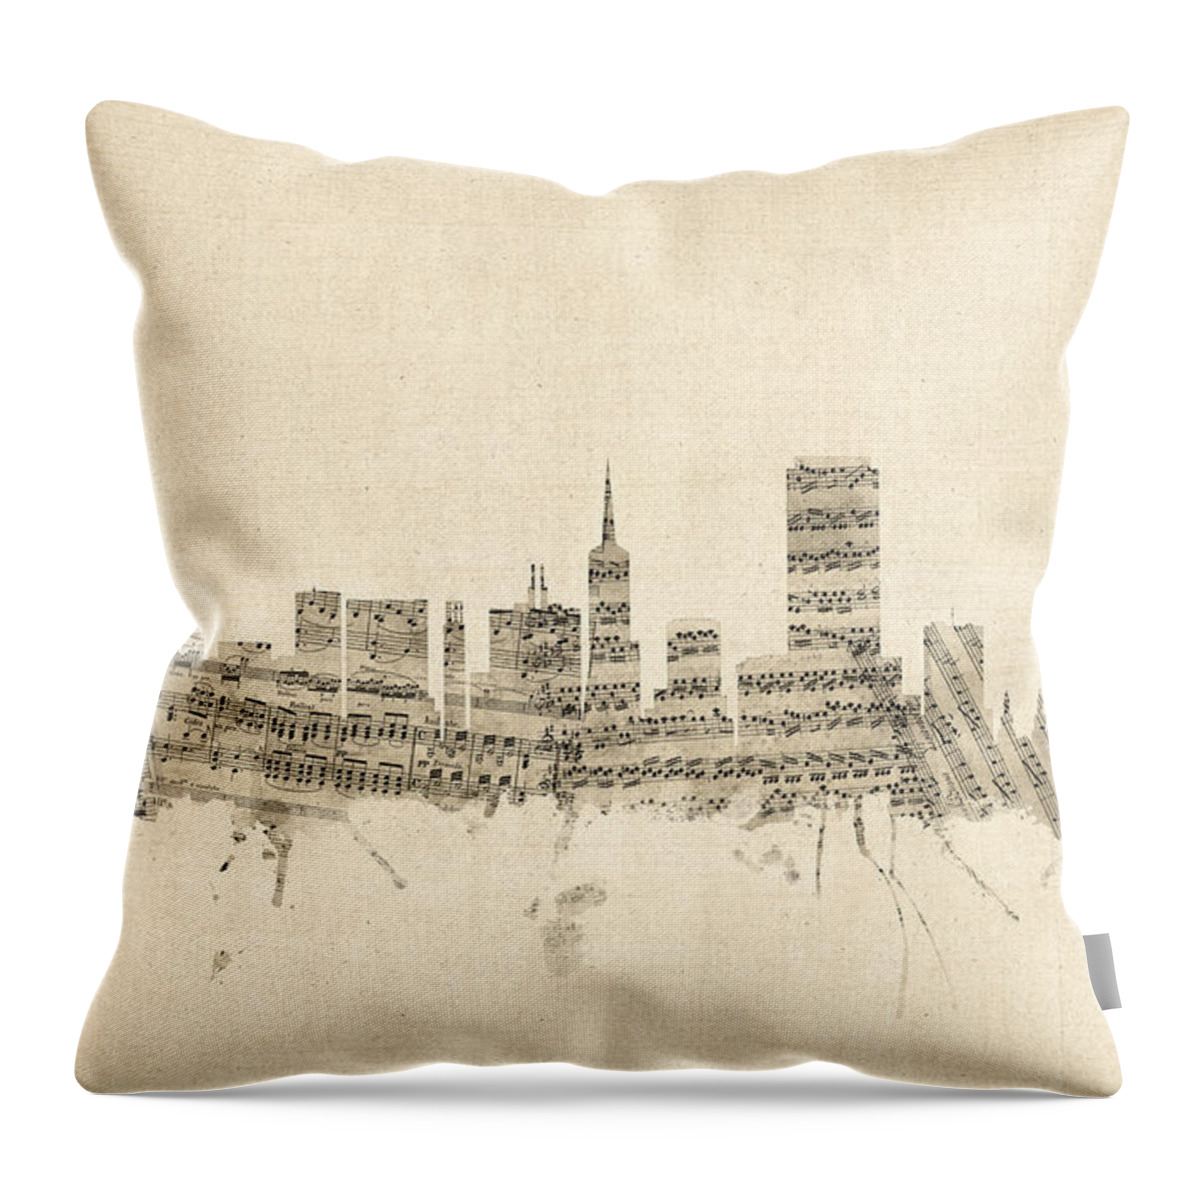 San Francisco Throw Pillow featuring the digital art San Francisco Skyline Sheet Music Cityscape by Michael Tompsett